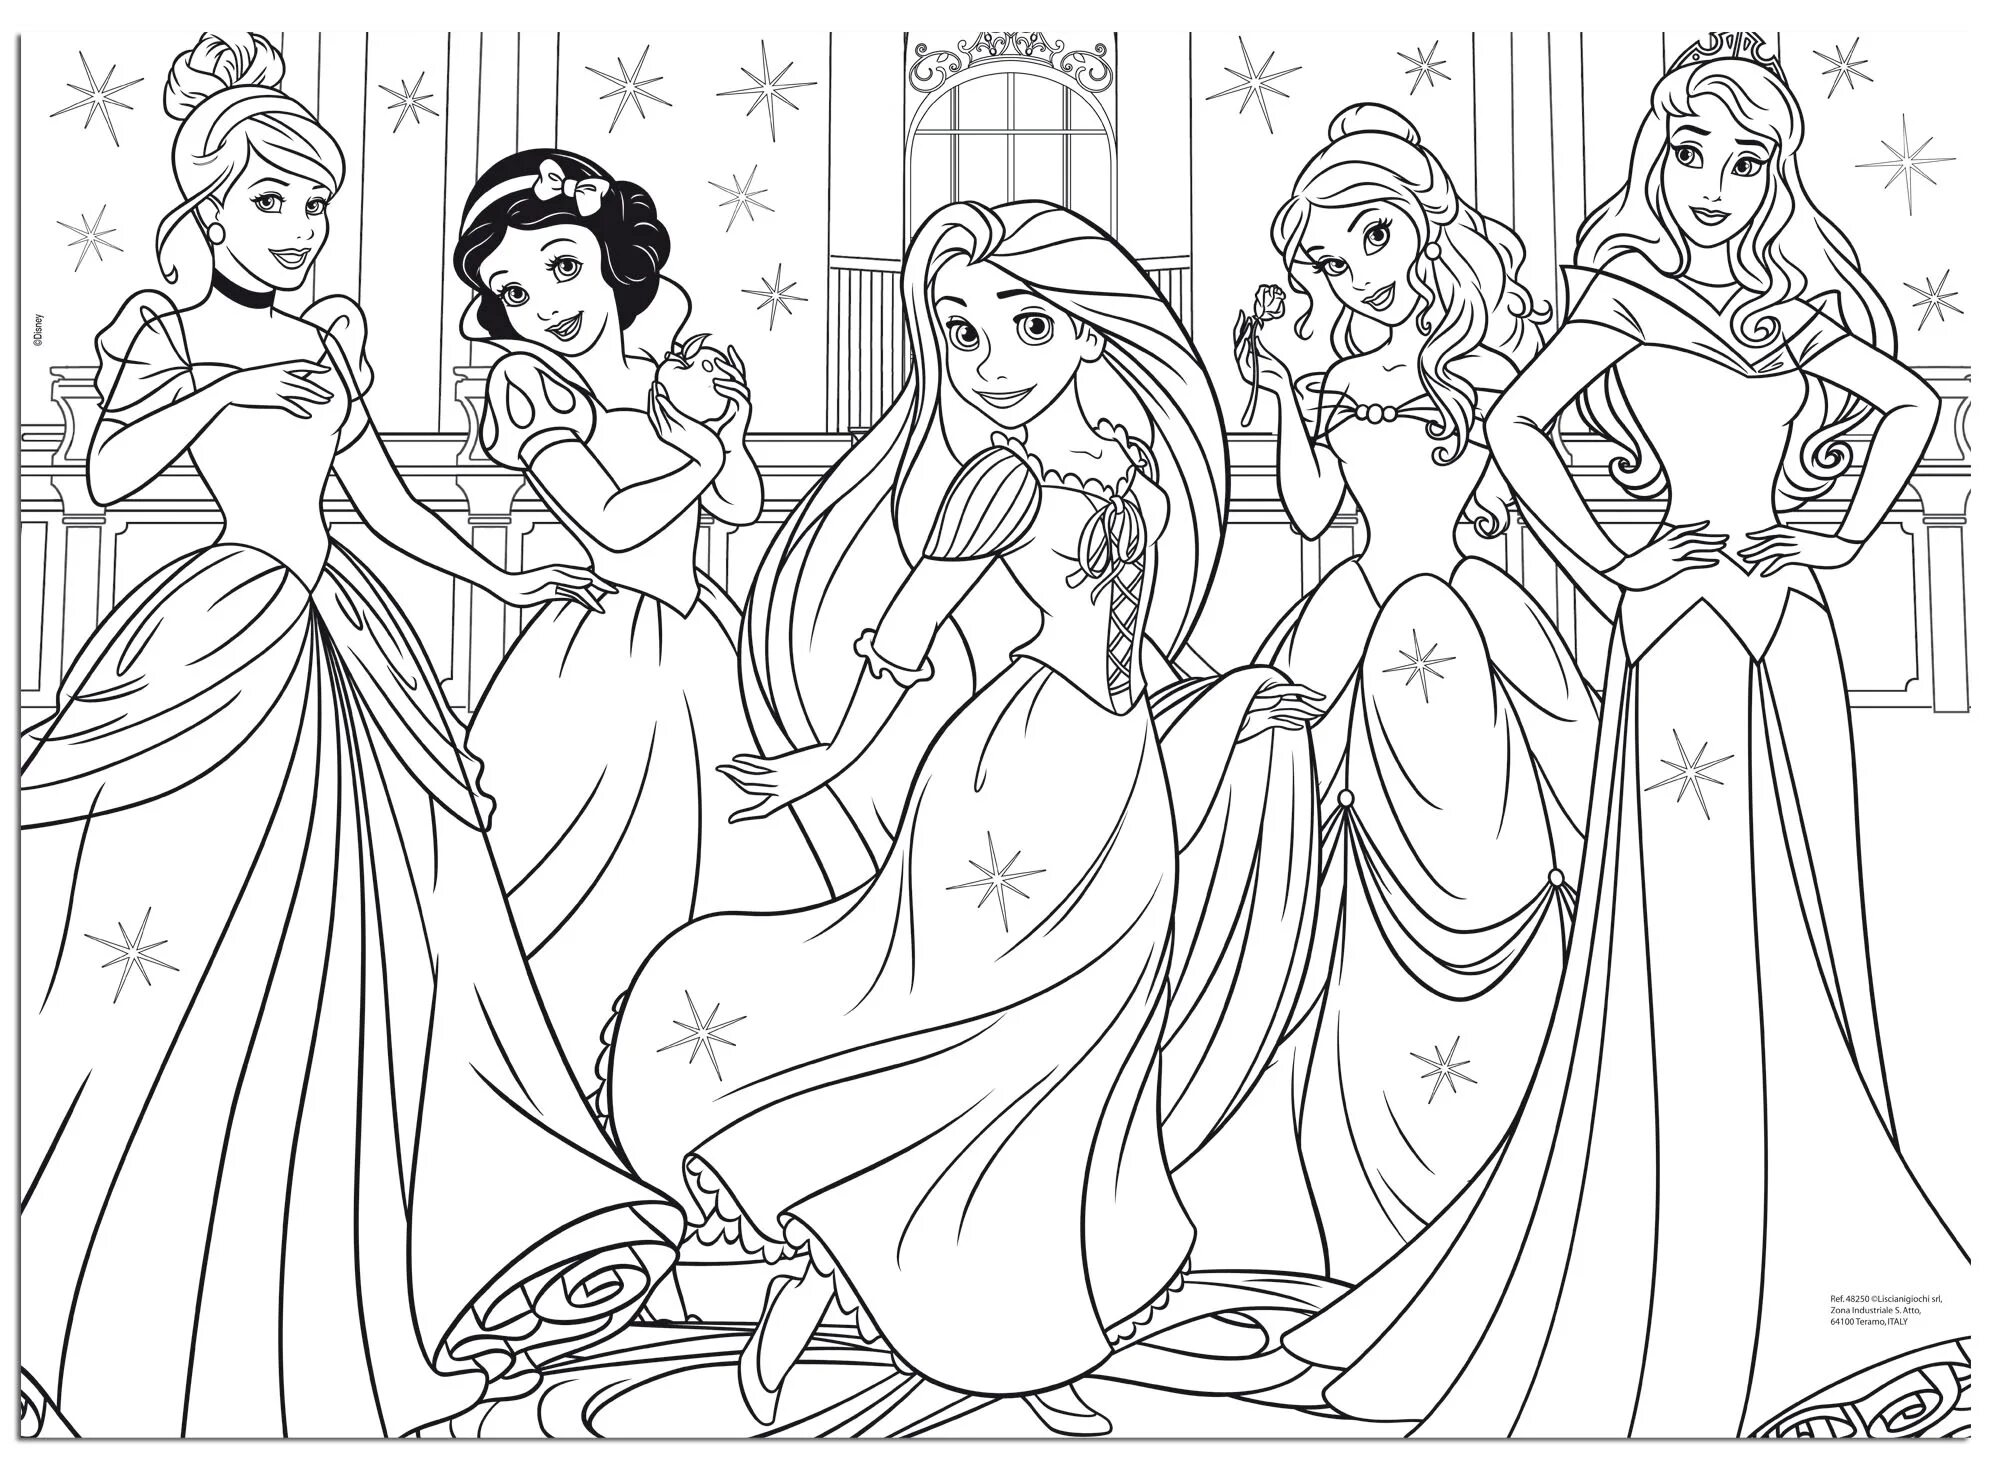 Princesses in one file #12